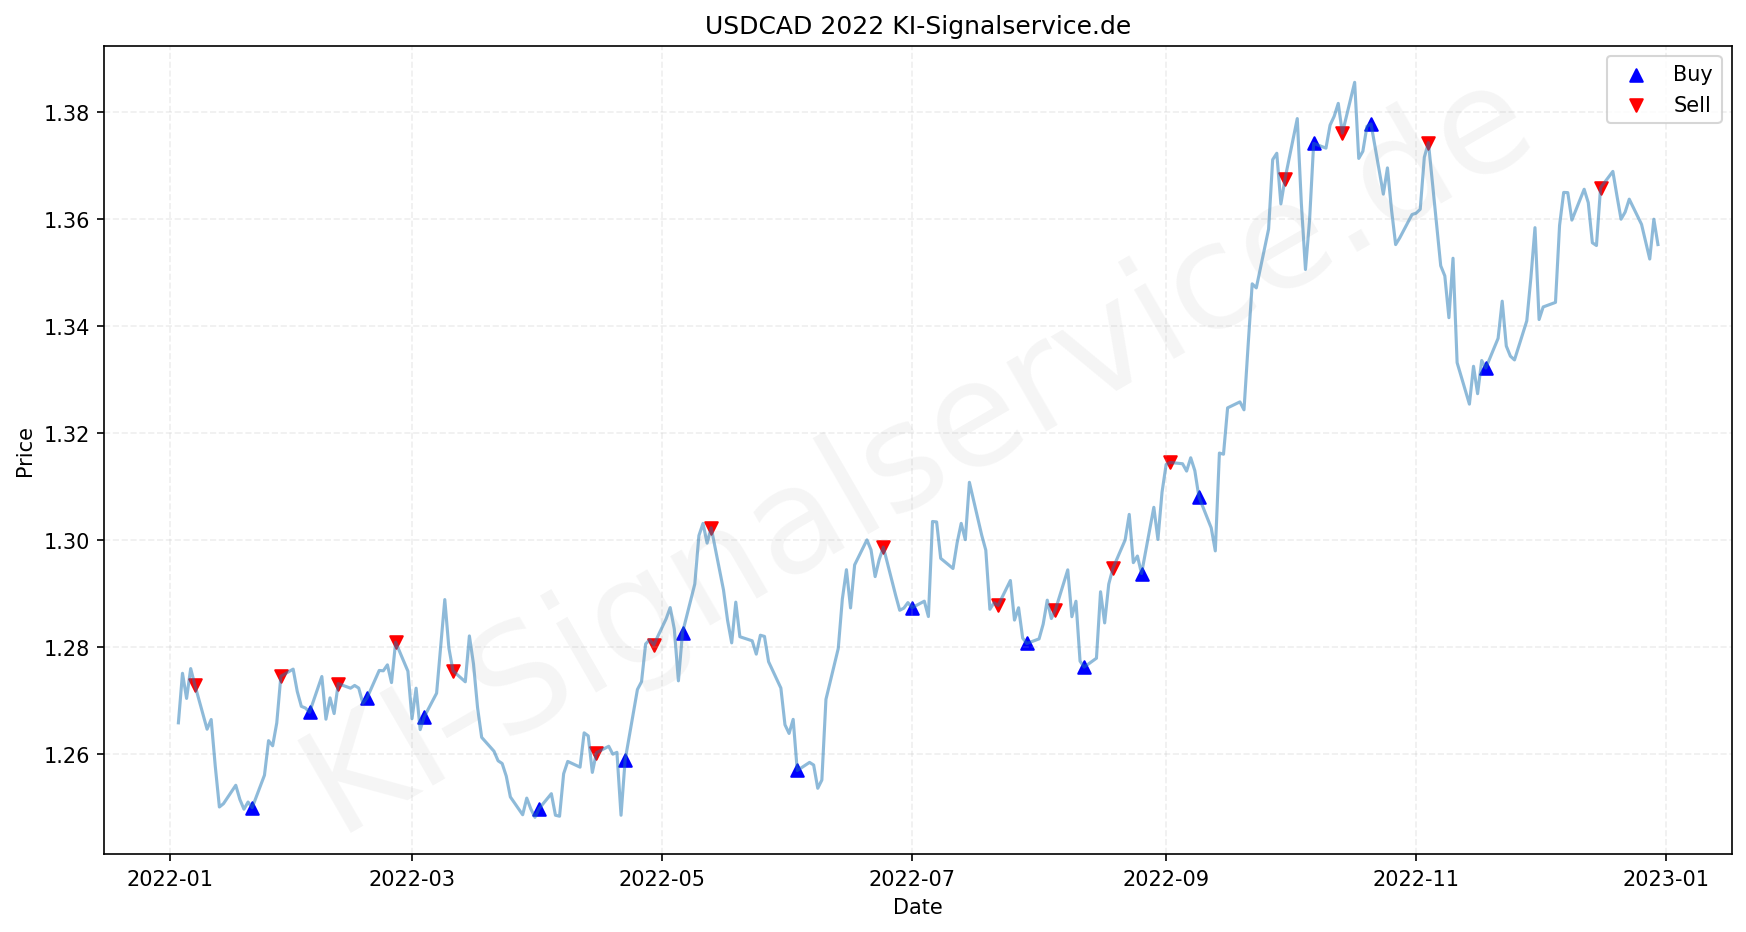 USDCAD Chart - KI Tradingsignale 2022